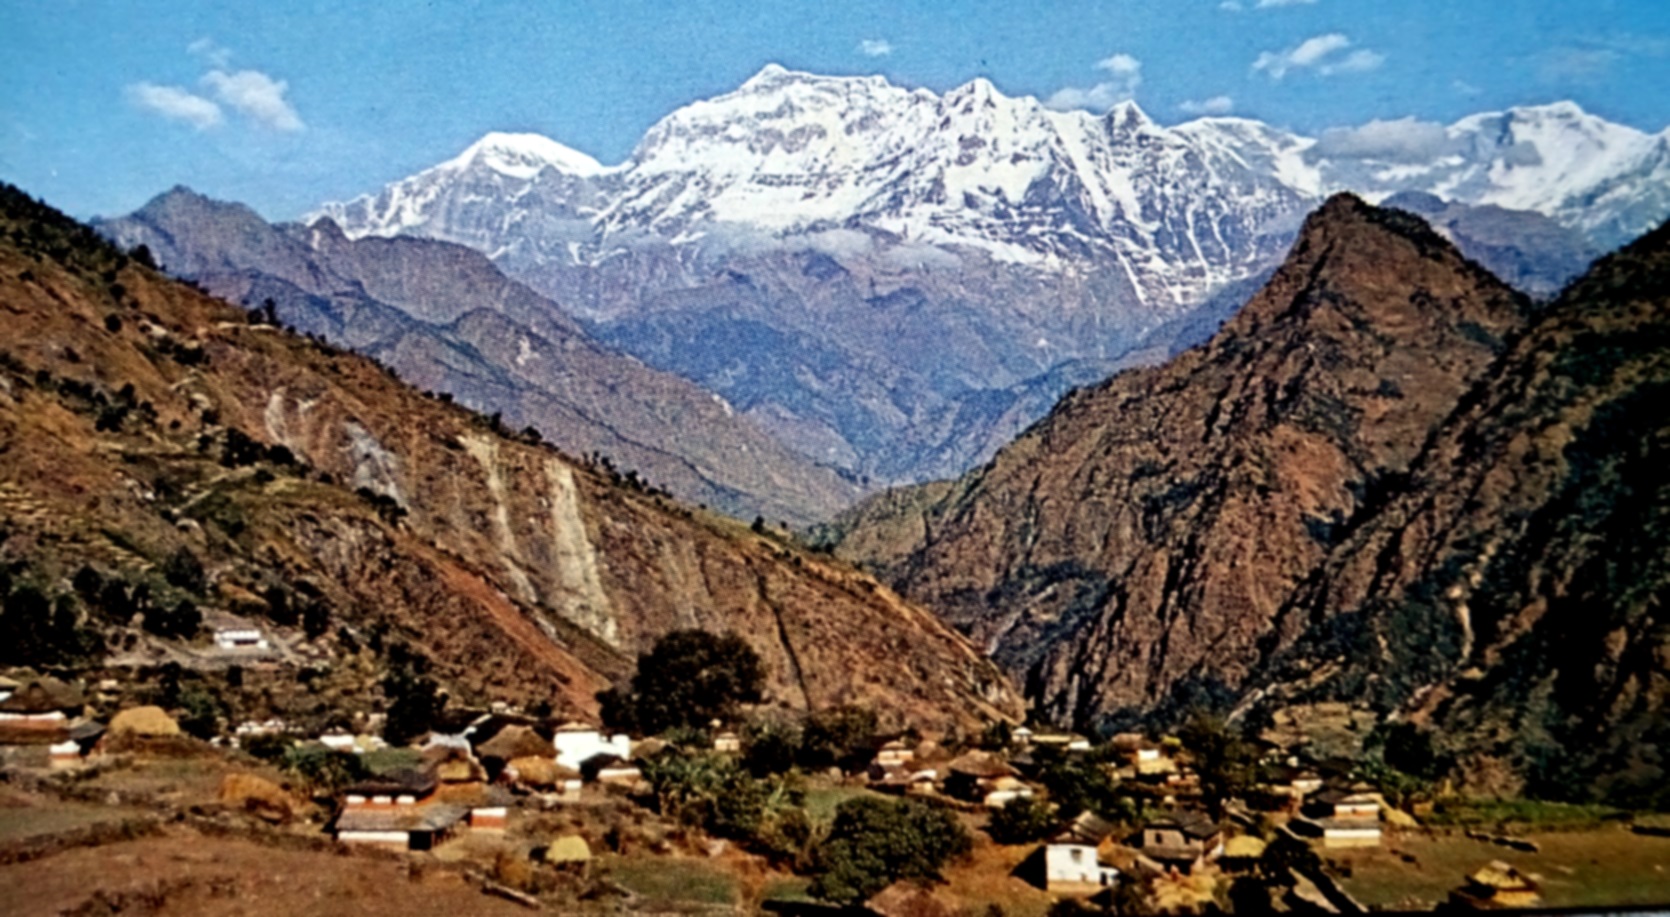 Darapani Village and the Gurja Hima in Dhaulagiri Region of Nepal